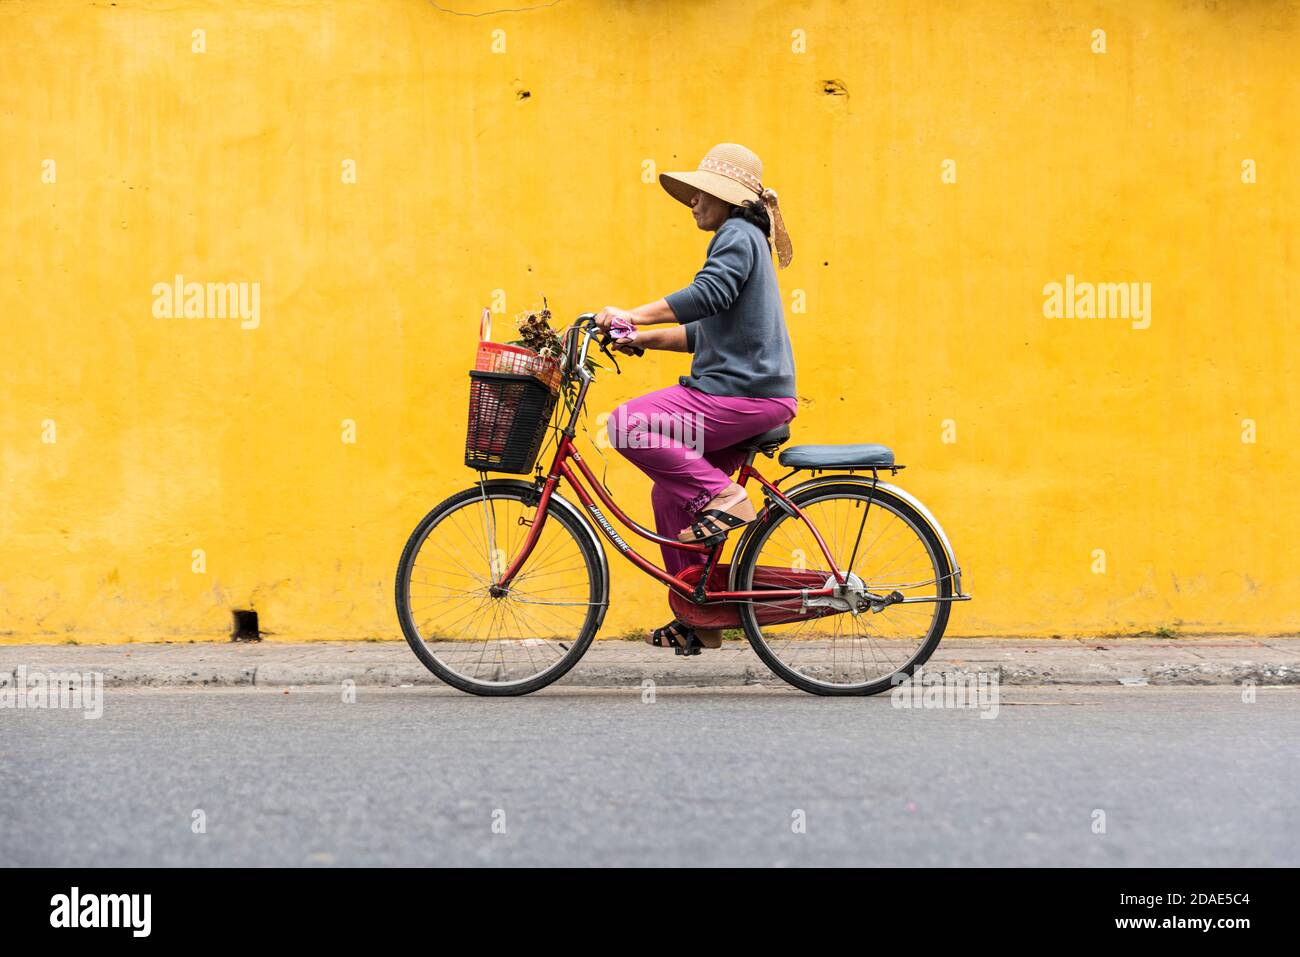 Hoi An Ancient Town, Vietnam, 27 gennaio 2020 - Donna in bicicletta senza casco in una strada a Hoi An Ancient Town Foto Stock